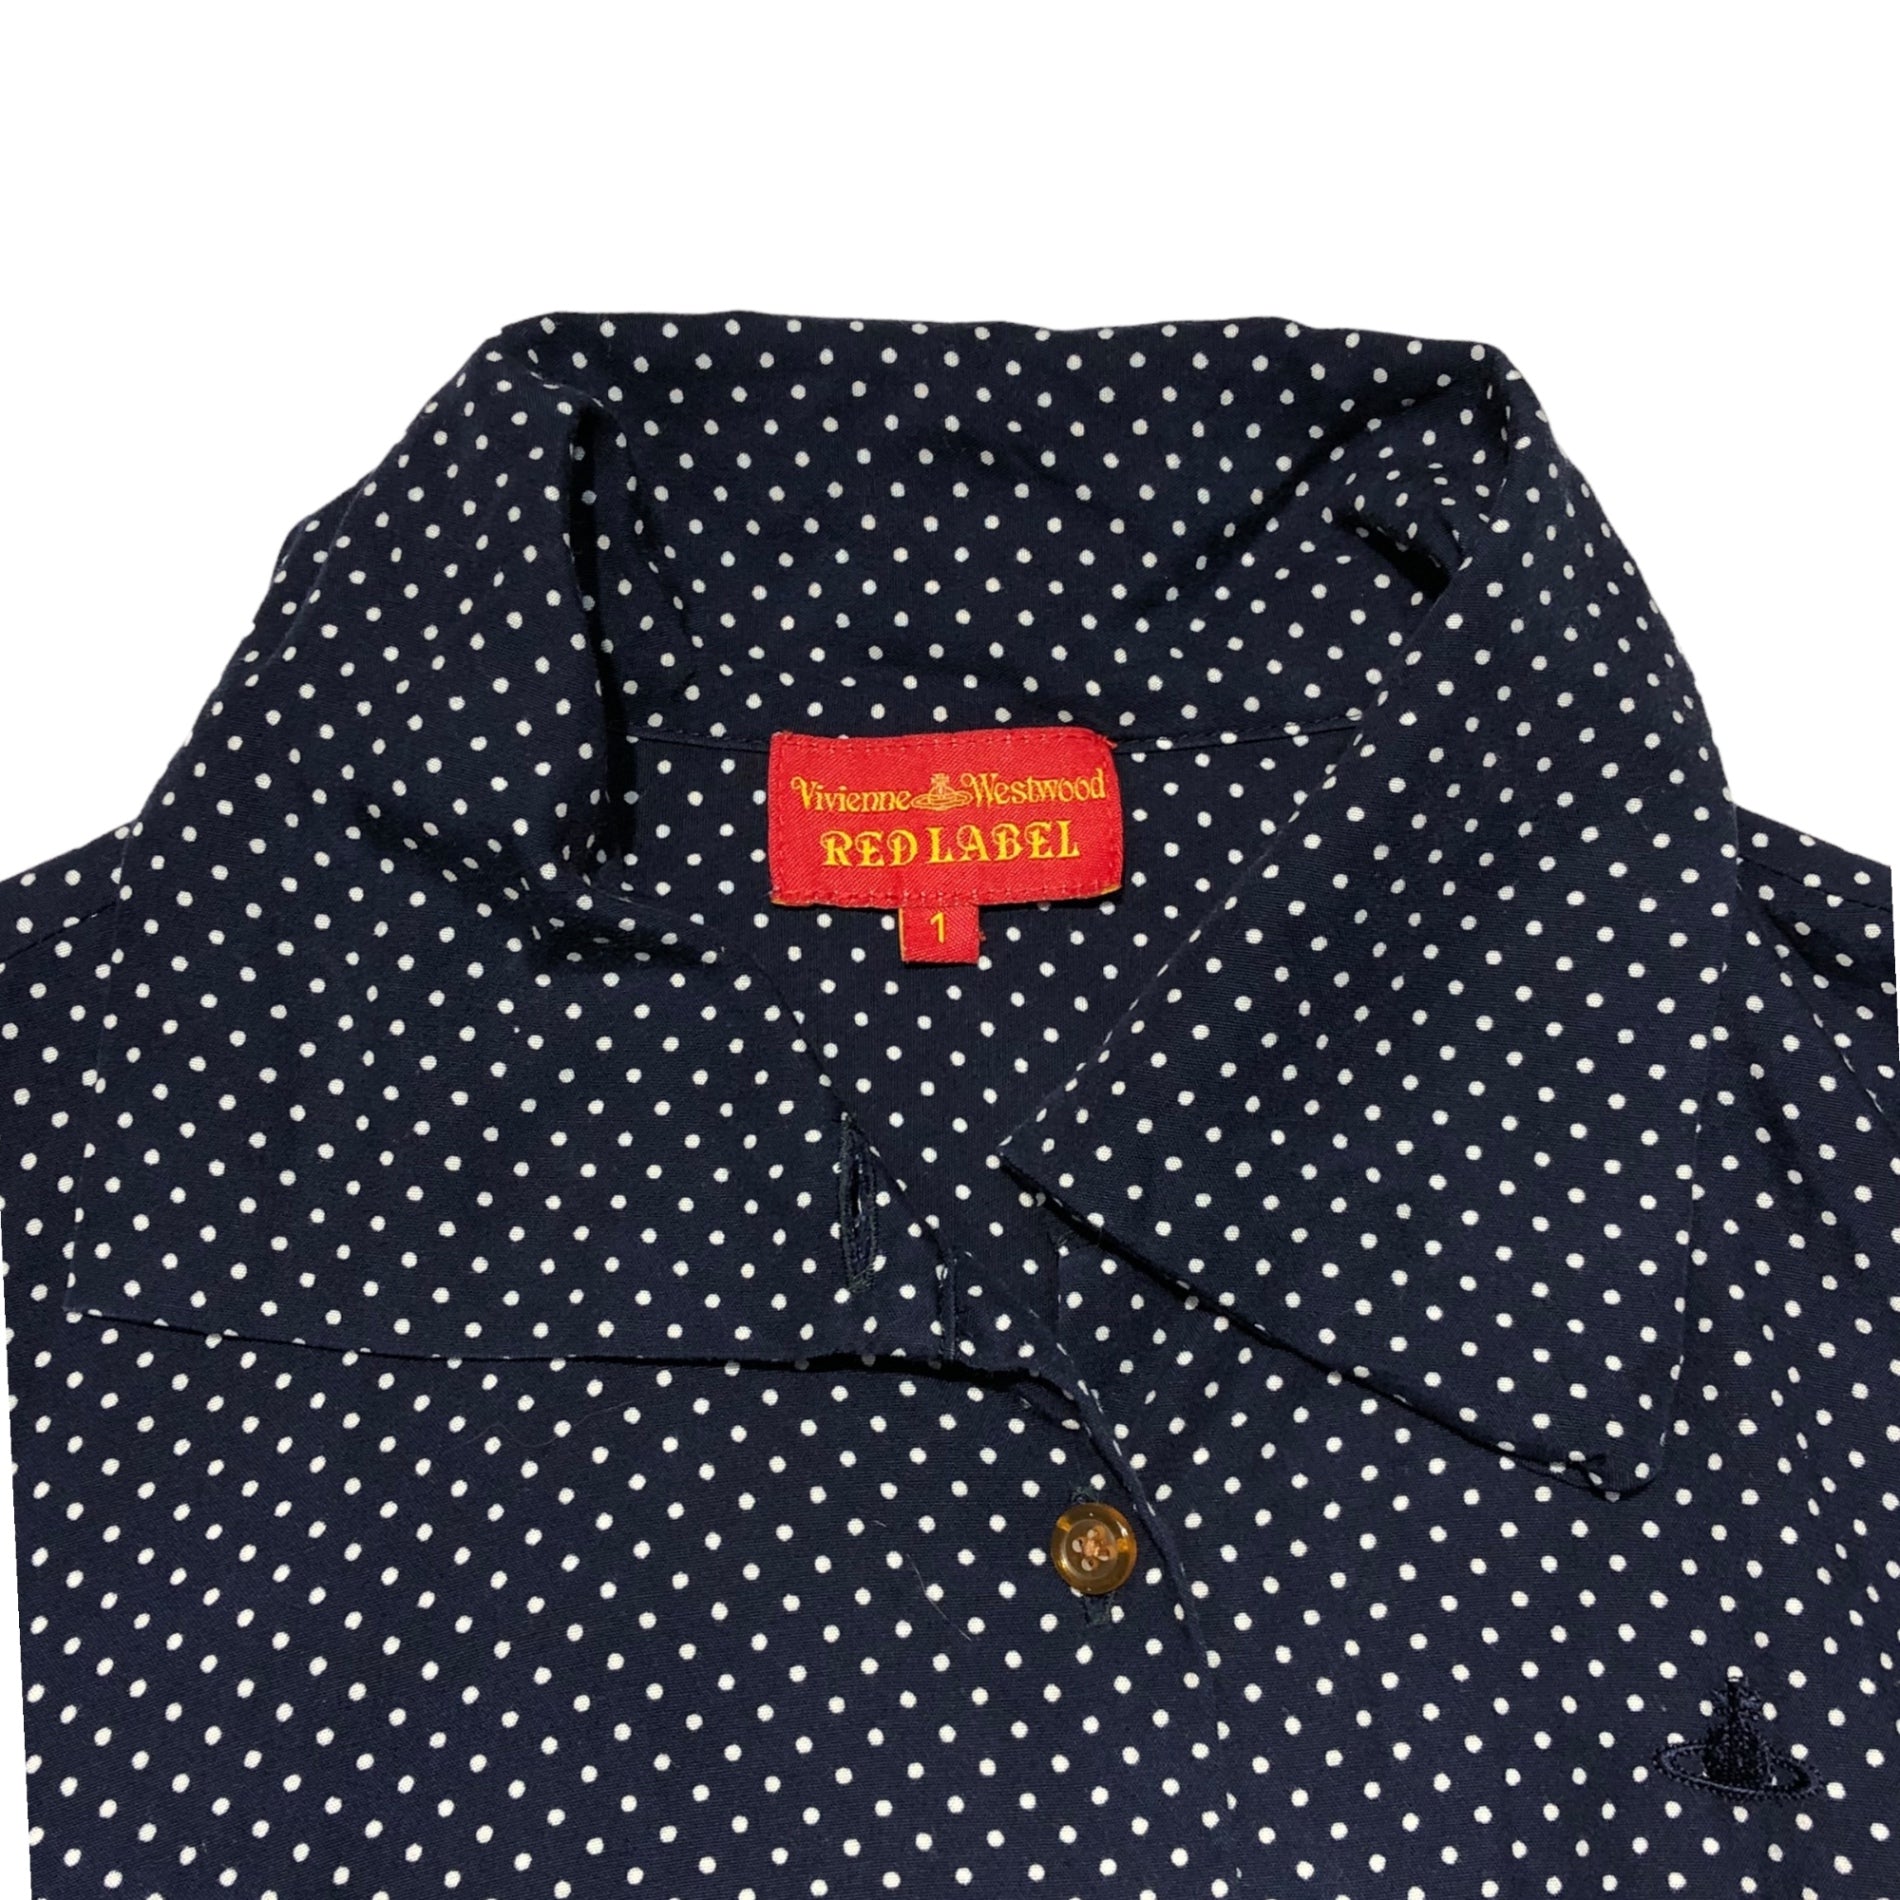 Vivienne Westwood RED LABEL(ヴィヴィアンウエストウッドレッドレーベル) 00's short sleeve dot blouse ショート スリーブ ドット ブラウス 357-01-59003 1(S程度) ネイビー×ホワイト ワンピース チュニック